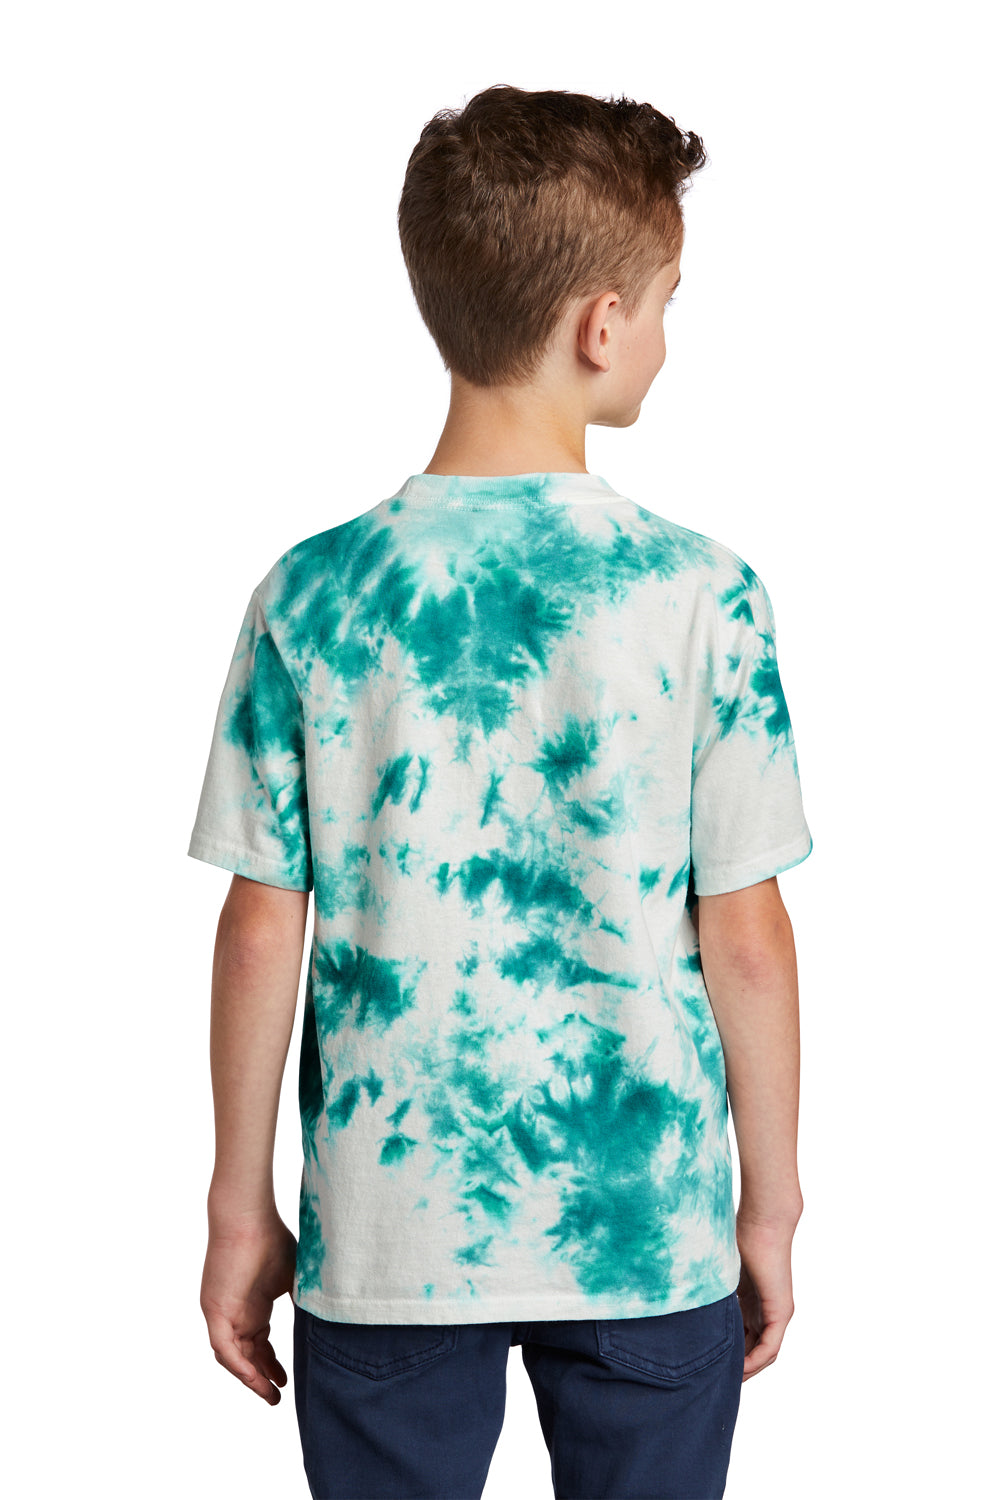 Port & Company Youth Crystal Tie-Dye Short Sleeve Crewneck T-Shirt Teal Blue Side